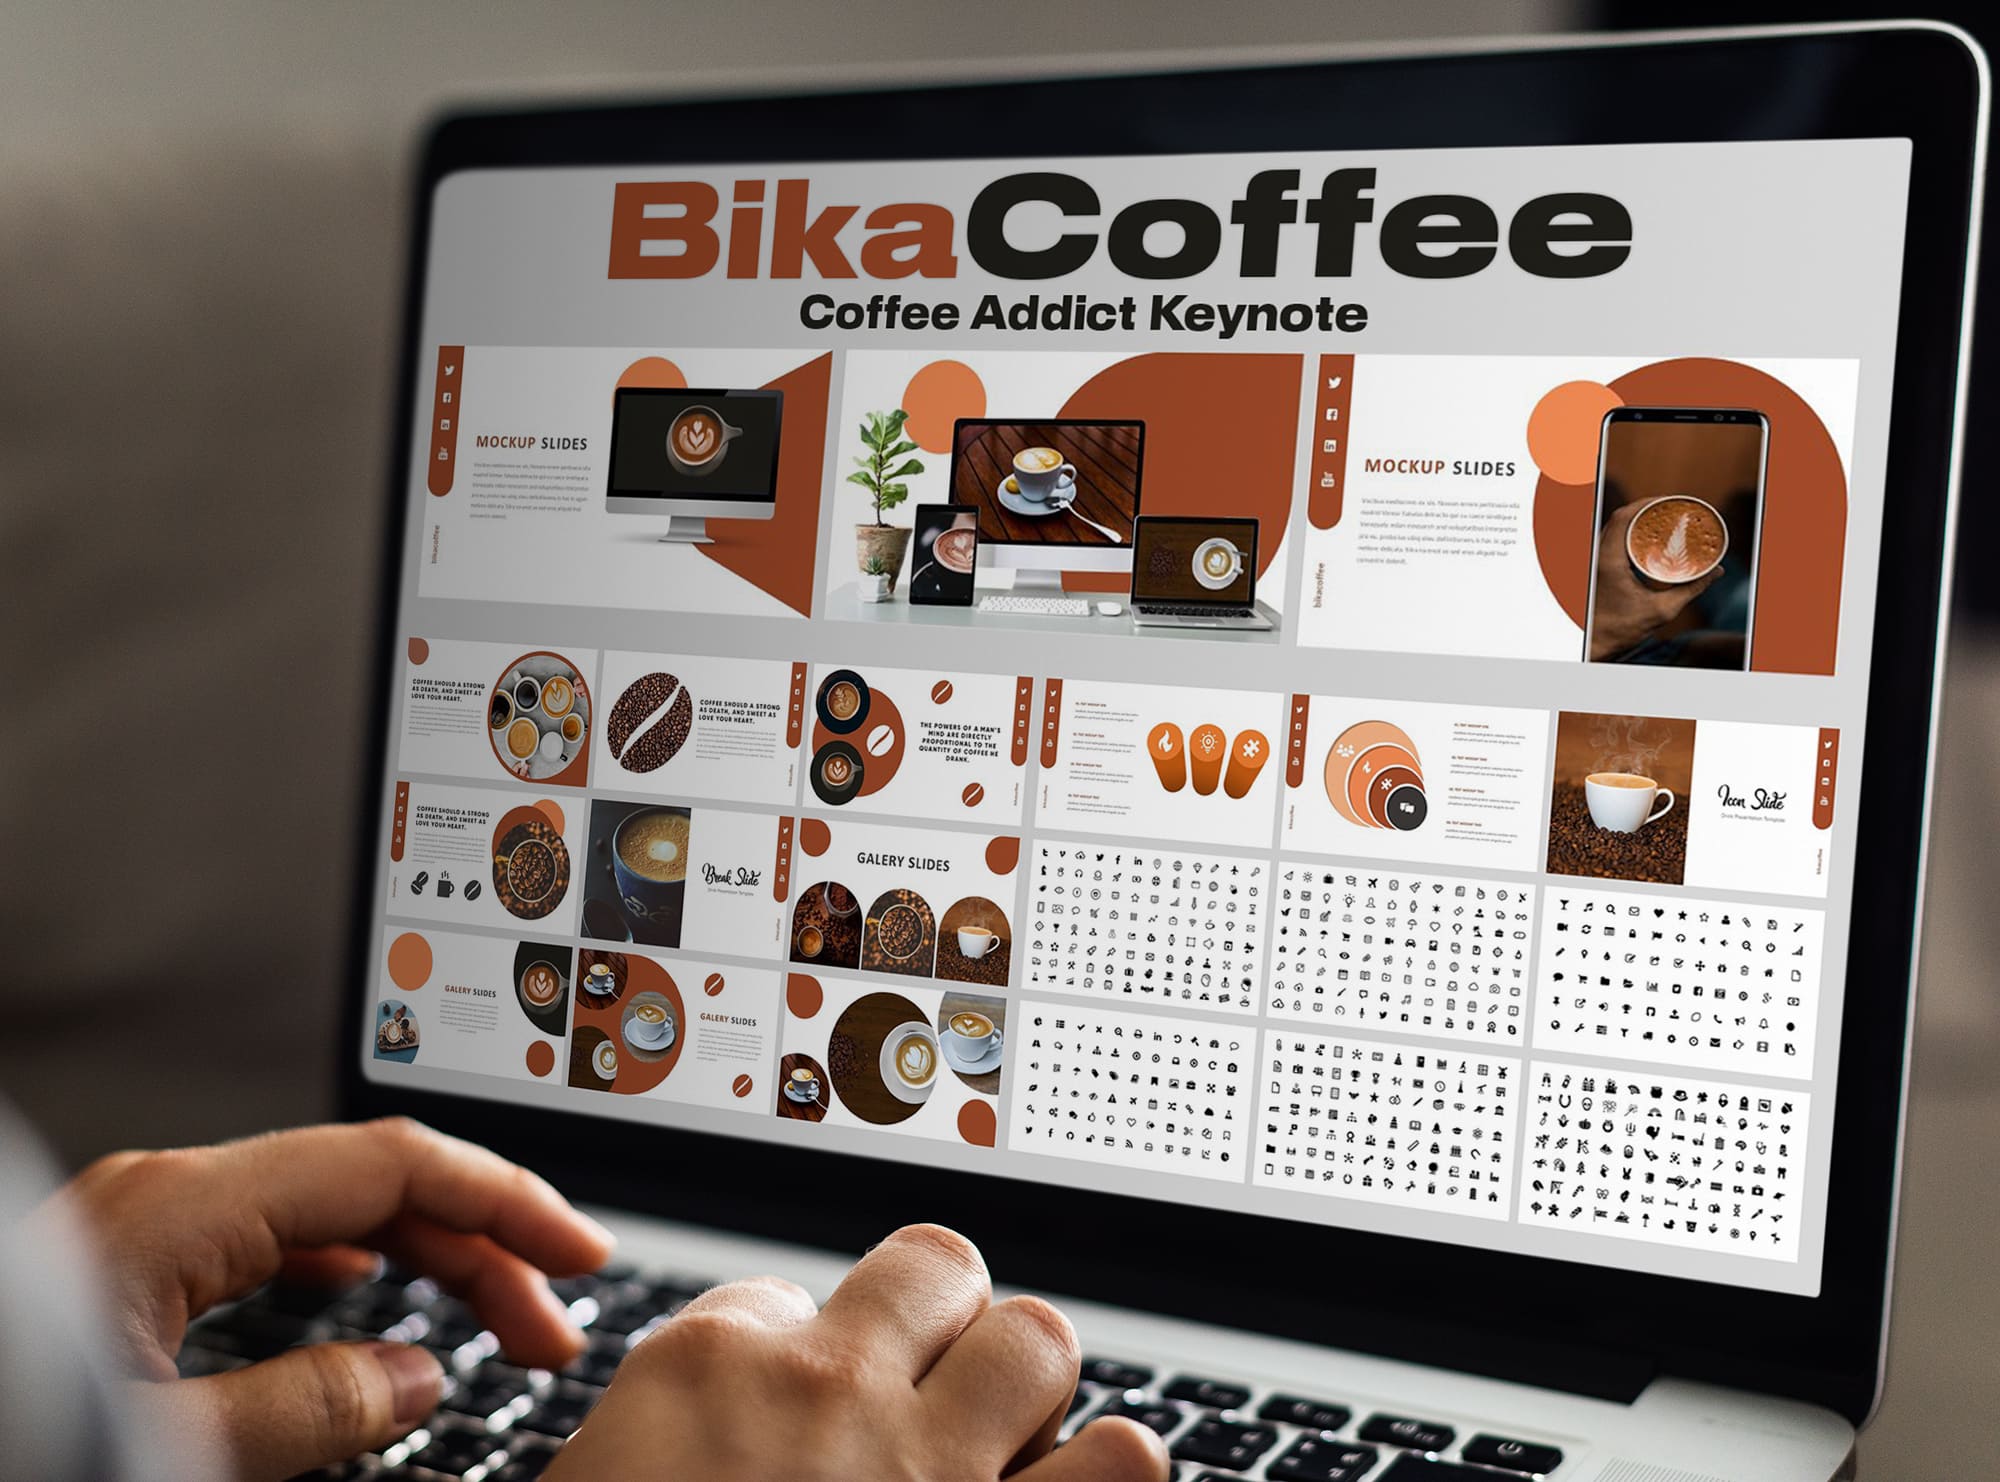 Big laptop option of the Bika Coffee - Coffee Addict Keynote.